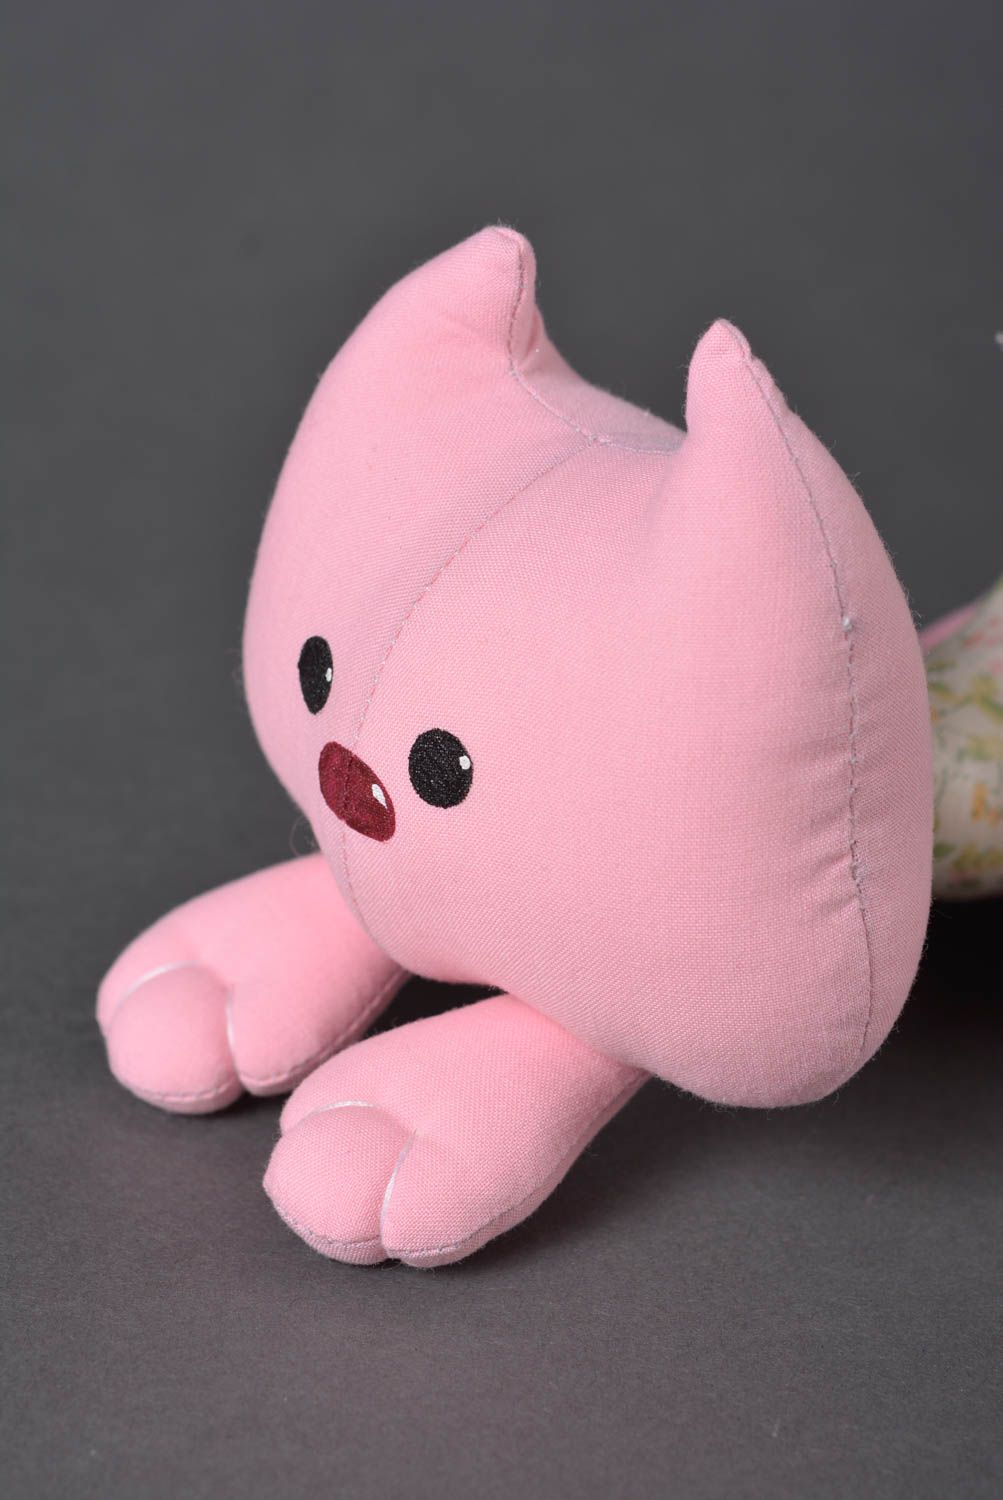 Handmade toy animal toy for kids nursery decor ideas gift for children photo 2